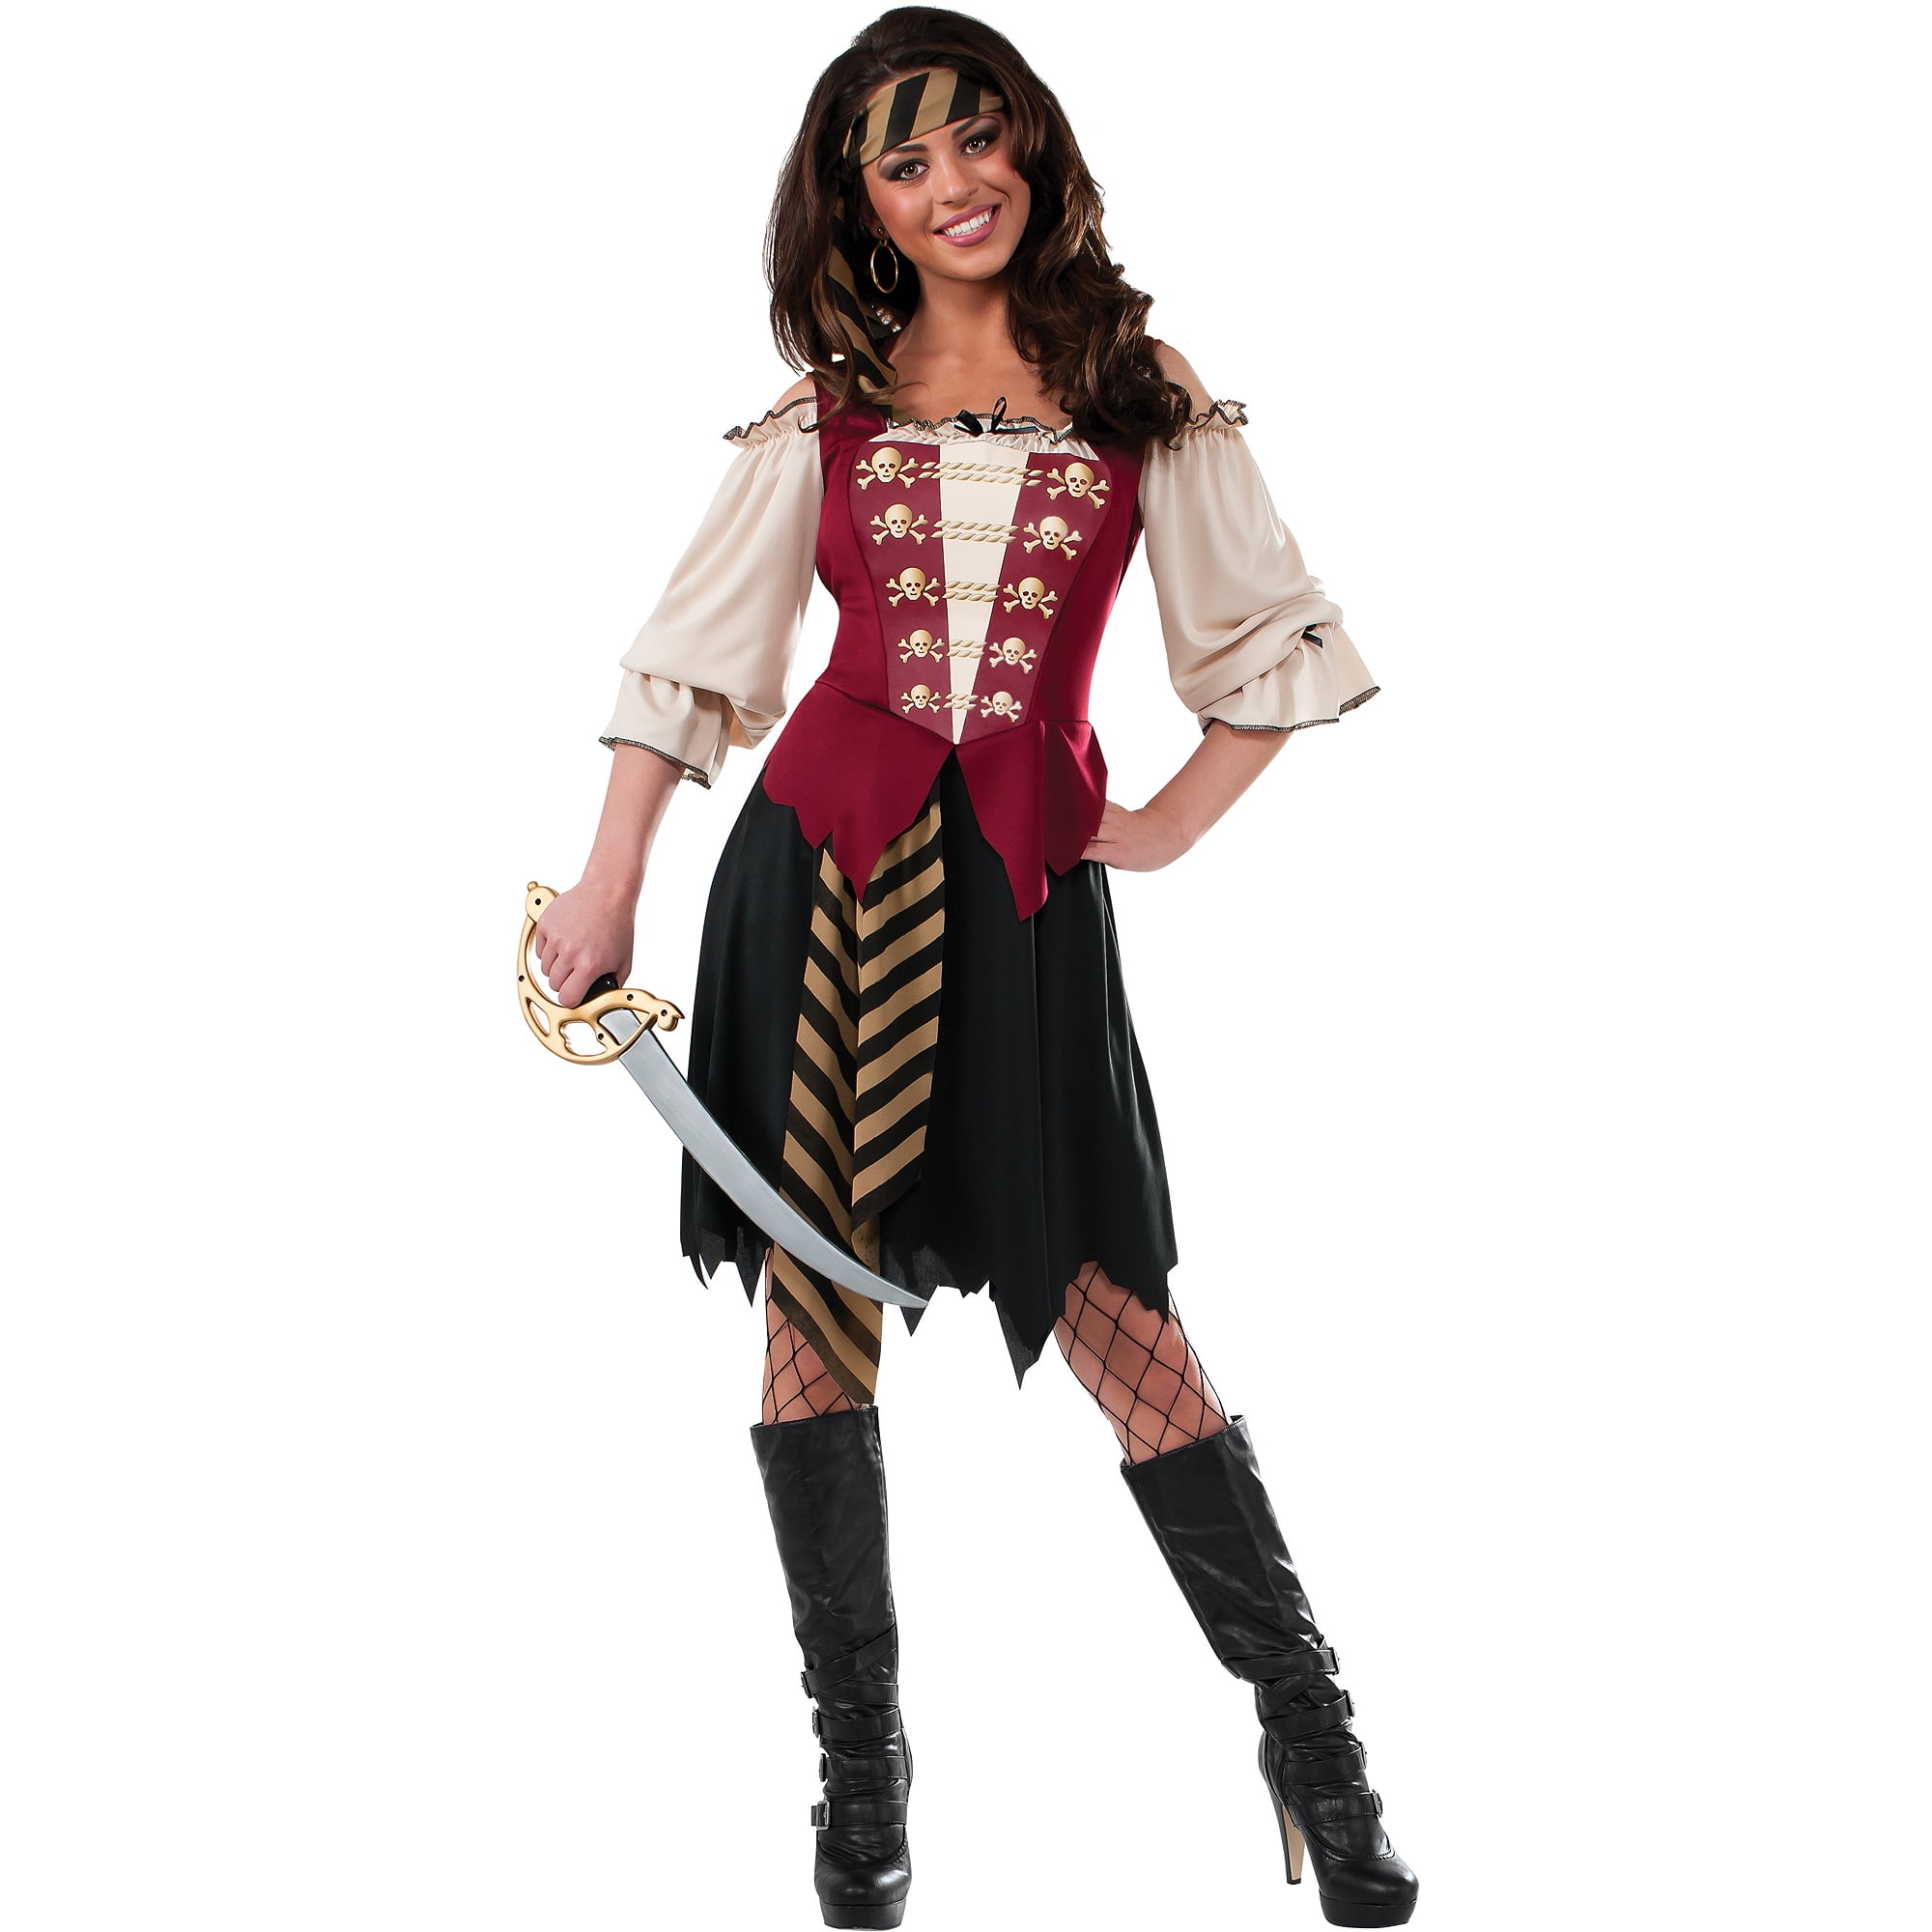 Rubies Pirate Dress Adult Halloween Costume - Walmart.com - Walmart.com